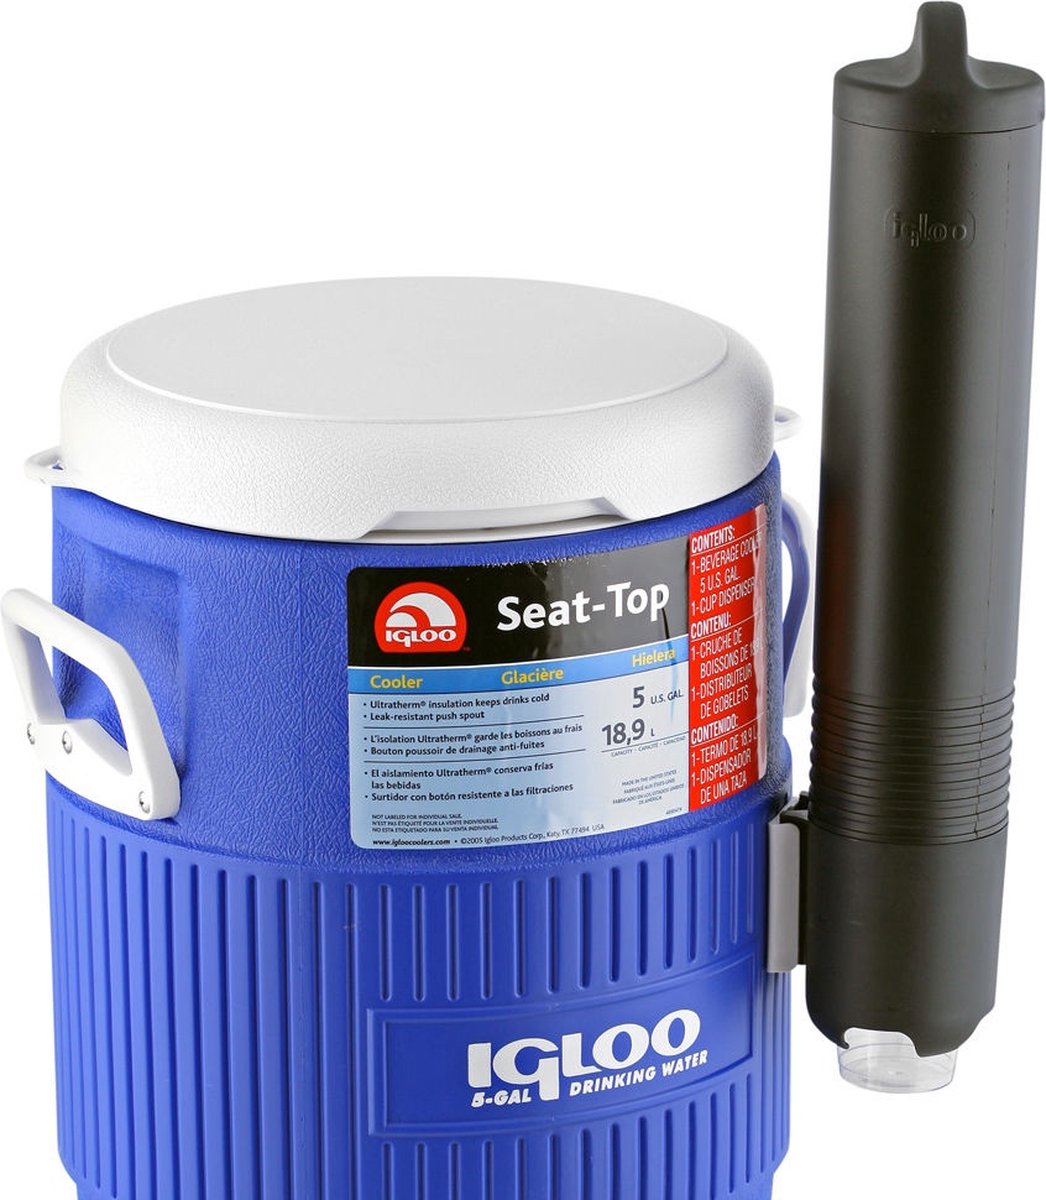 Igloo 5 Gallon Seat Top - Drankdispenser / drankkoeler inclusief bekerhouder - 19 Liter - Blauw